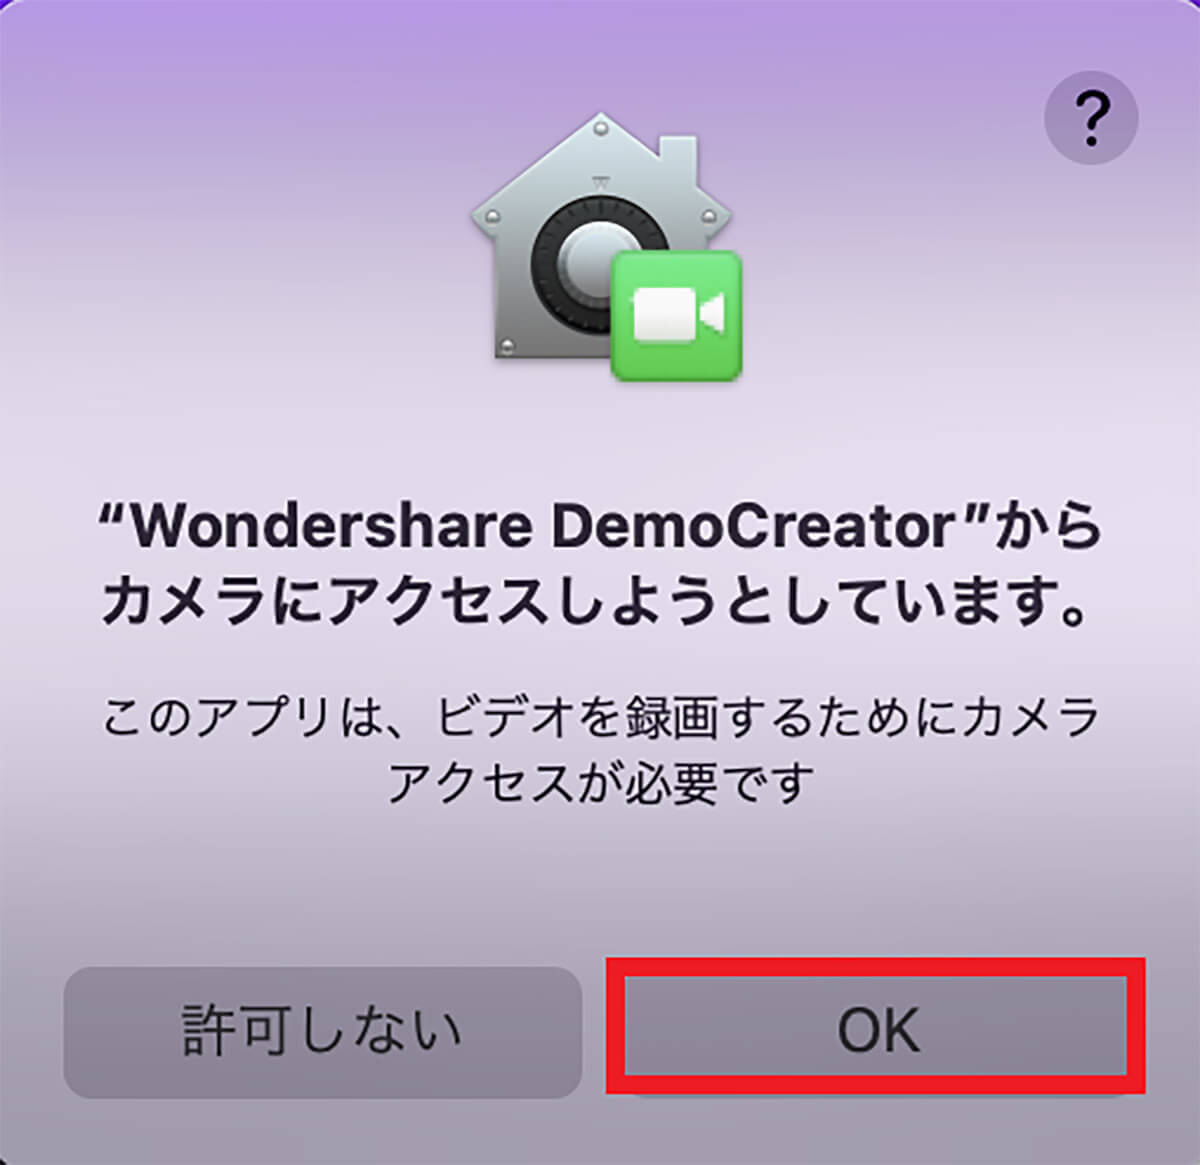 Wondershare DemoCreatordをダウンロードする手順と操作方法5